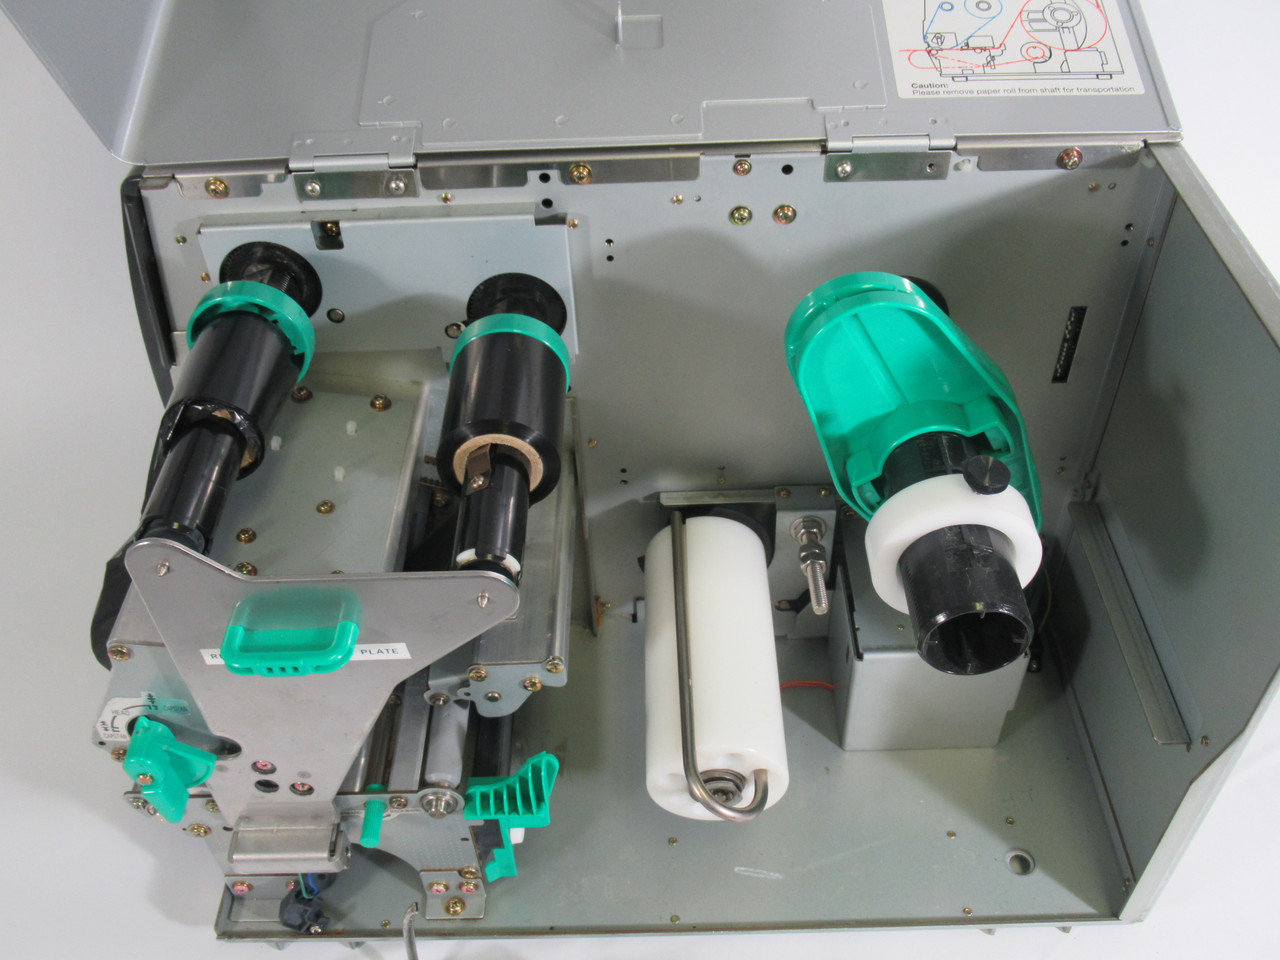 TEC B-572-QQ Thermal Bar Code Printer 100-120V *Missing Components* USED